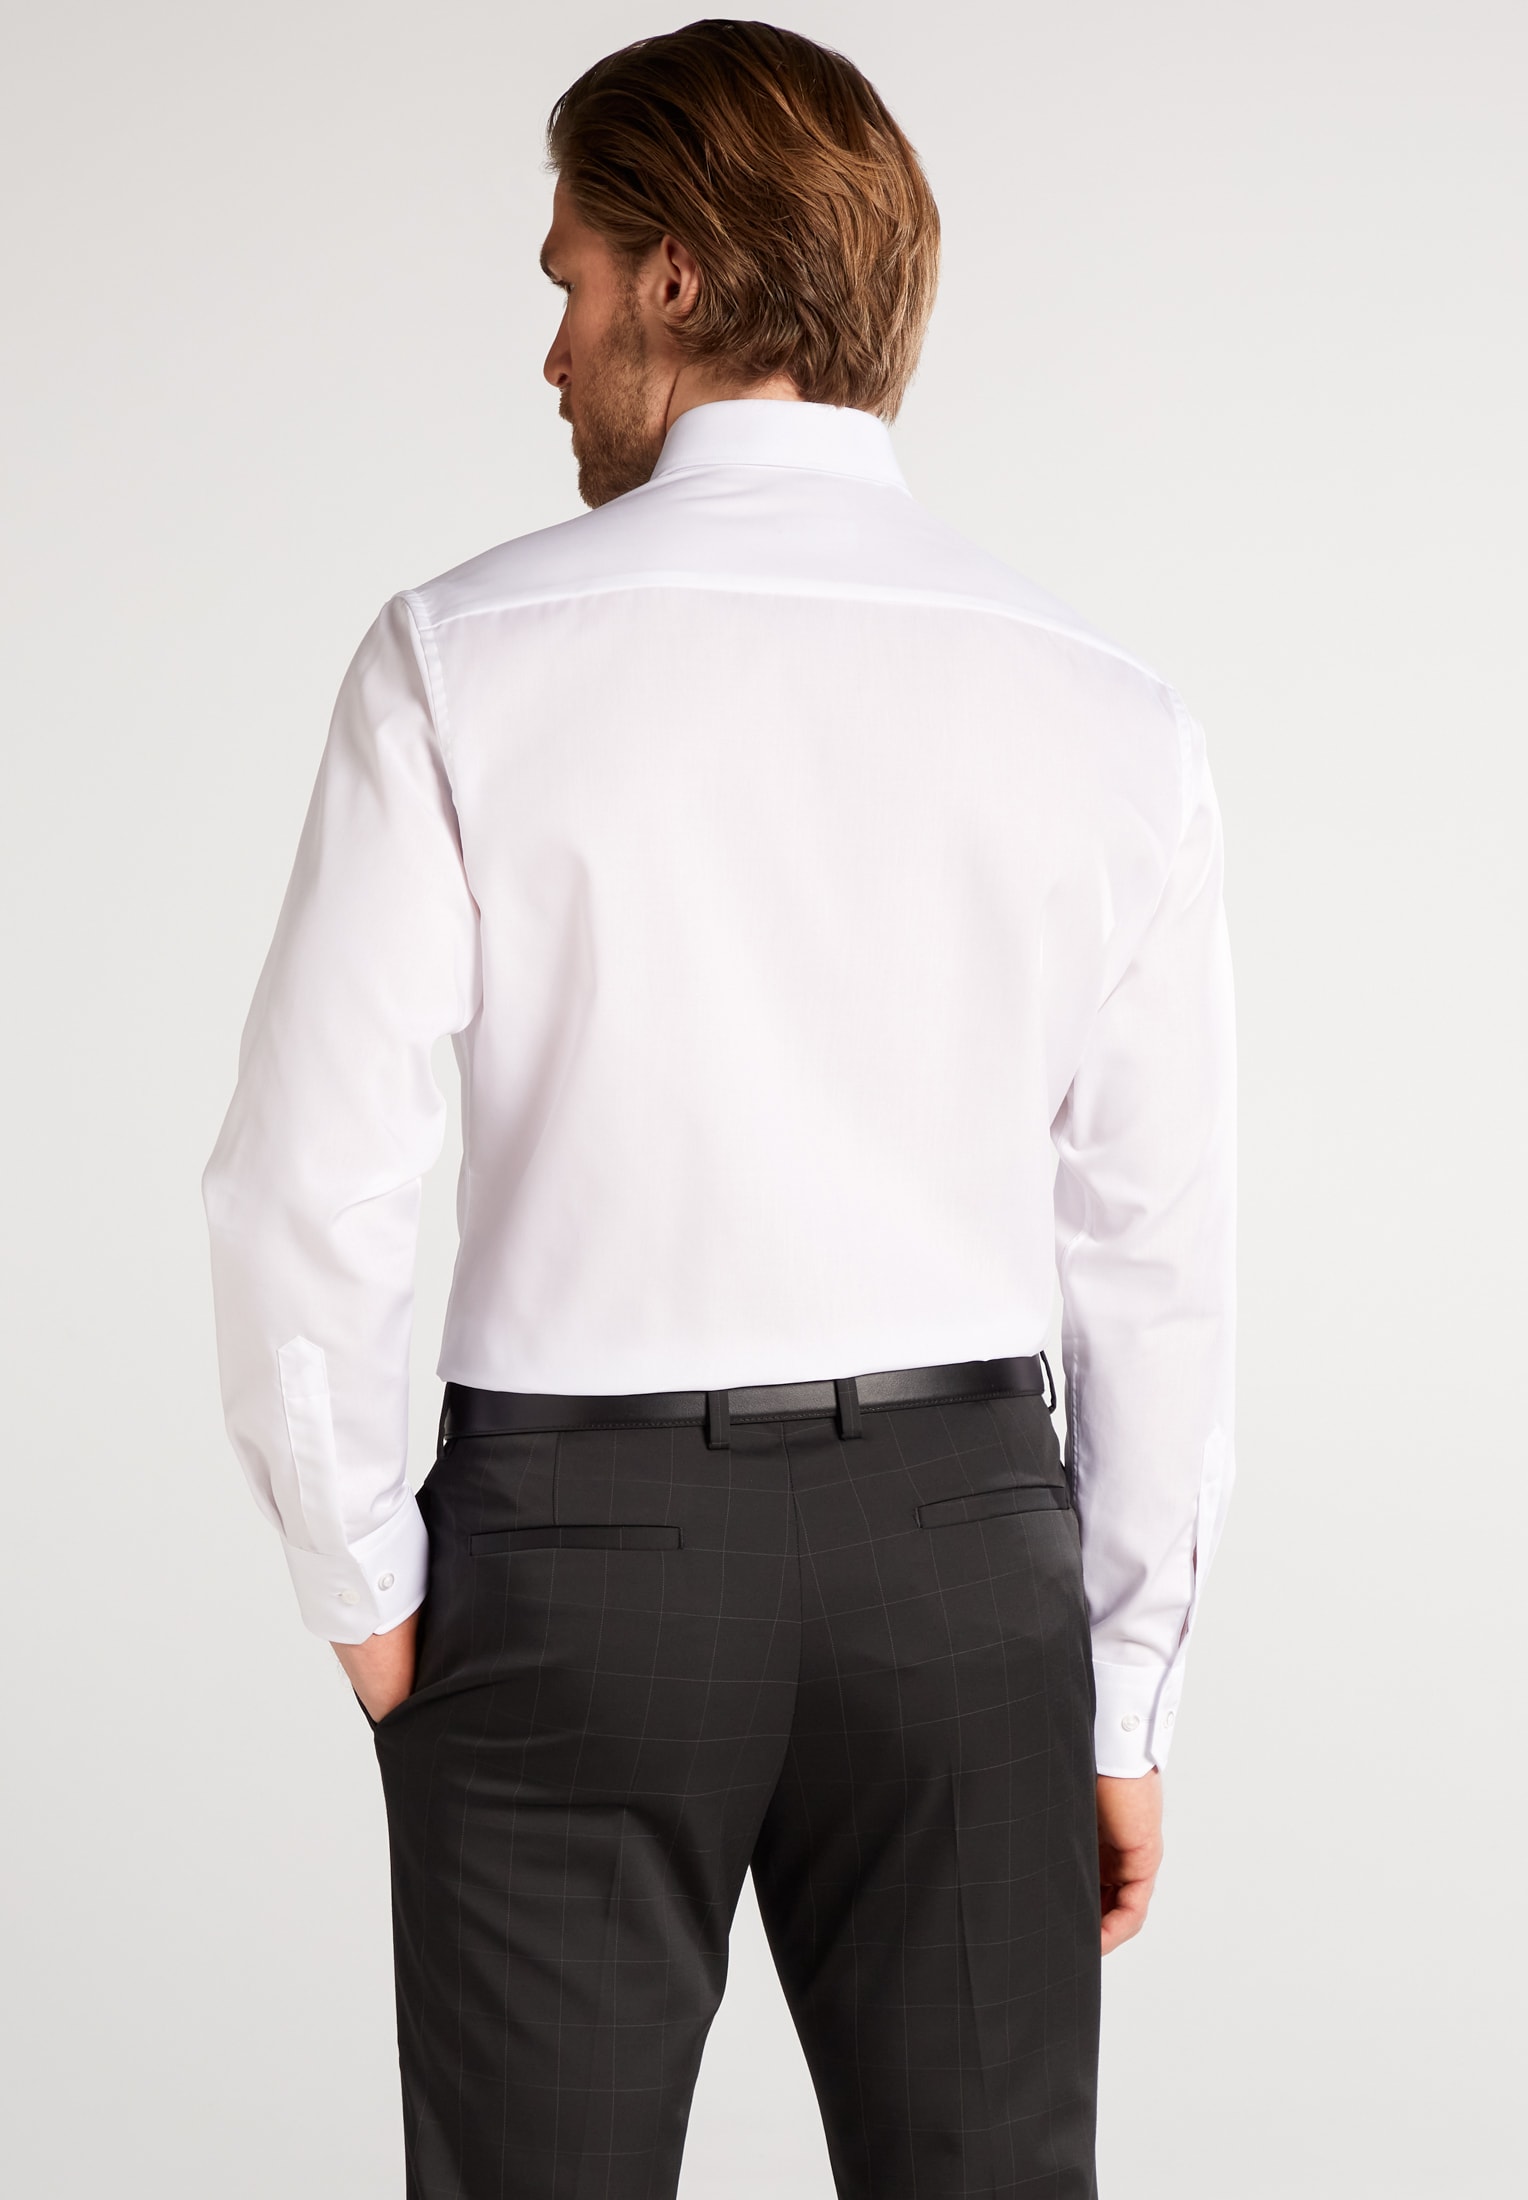 Langarm | Shirt unifarben | FIT | 44 in Original weiß 1SH00113-00-01-44-1/1 MODERN weiß |